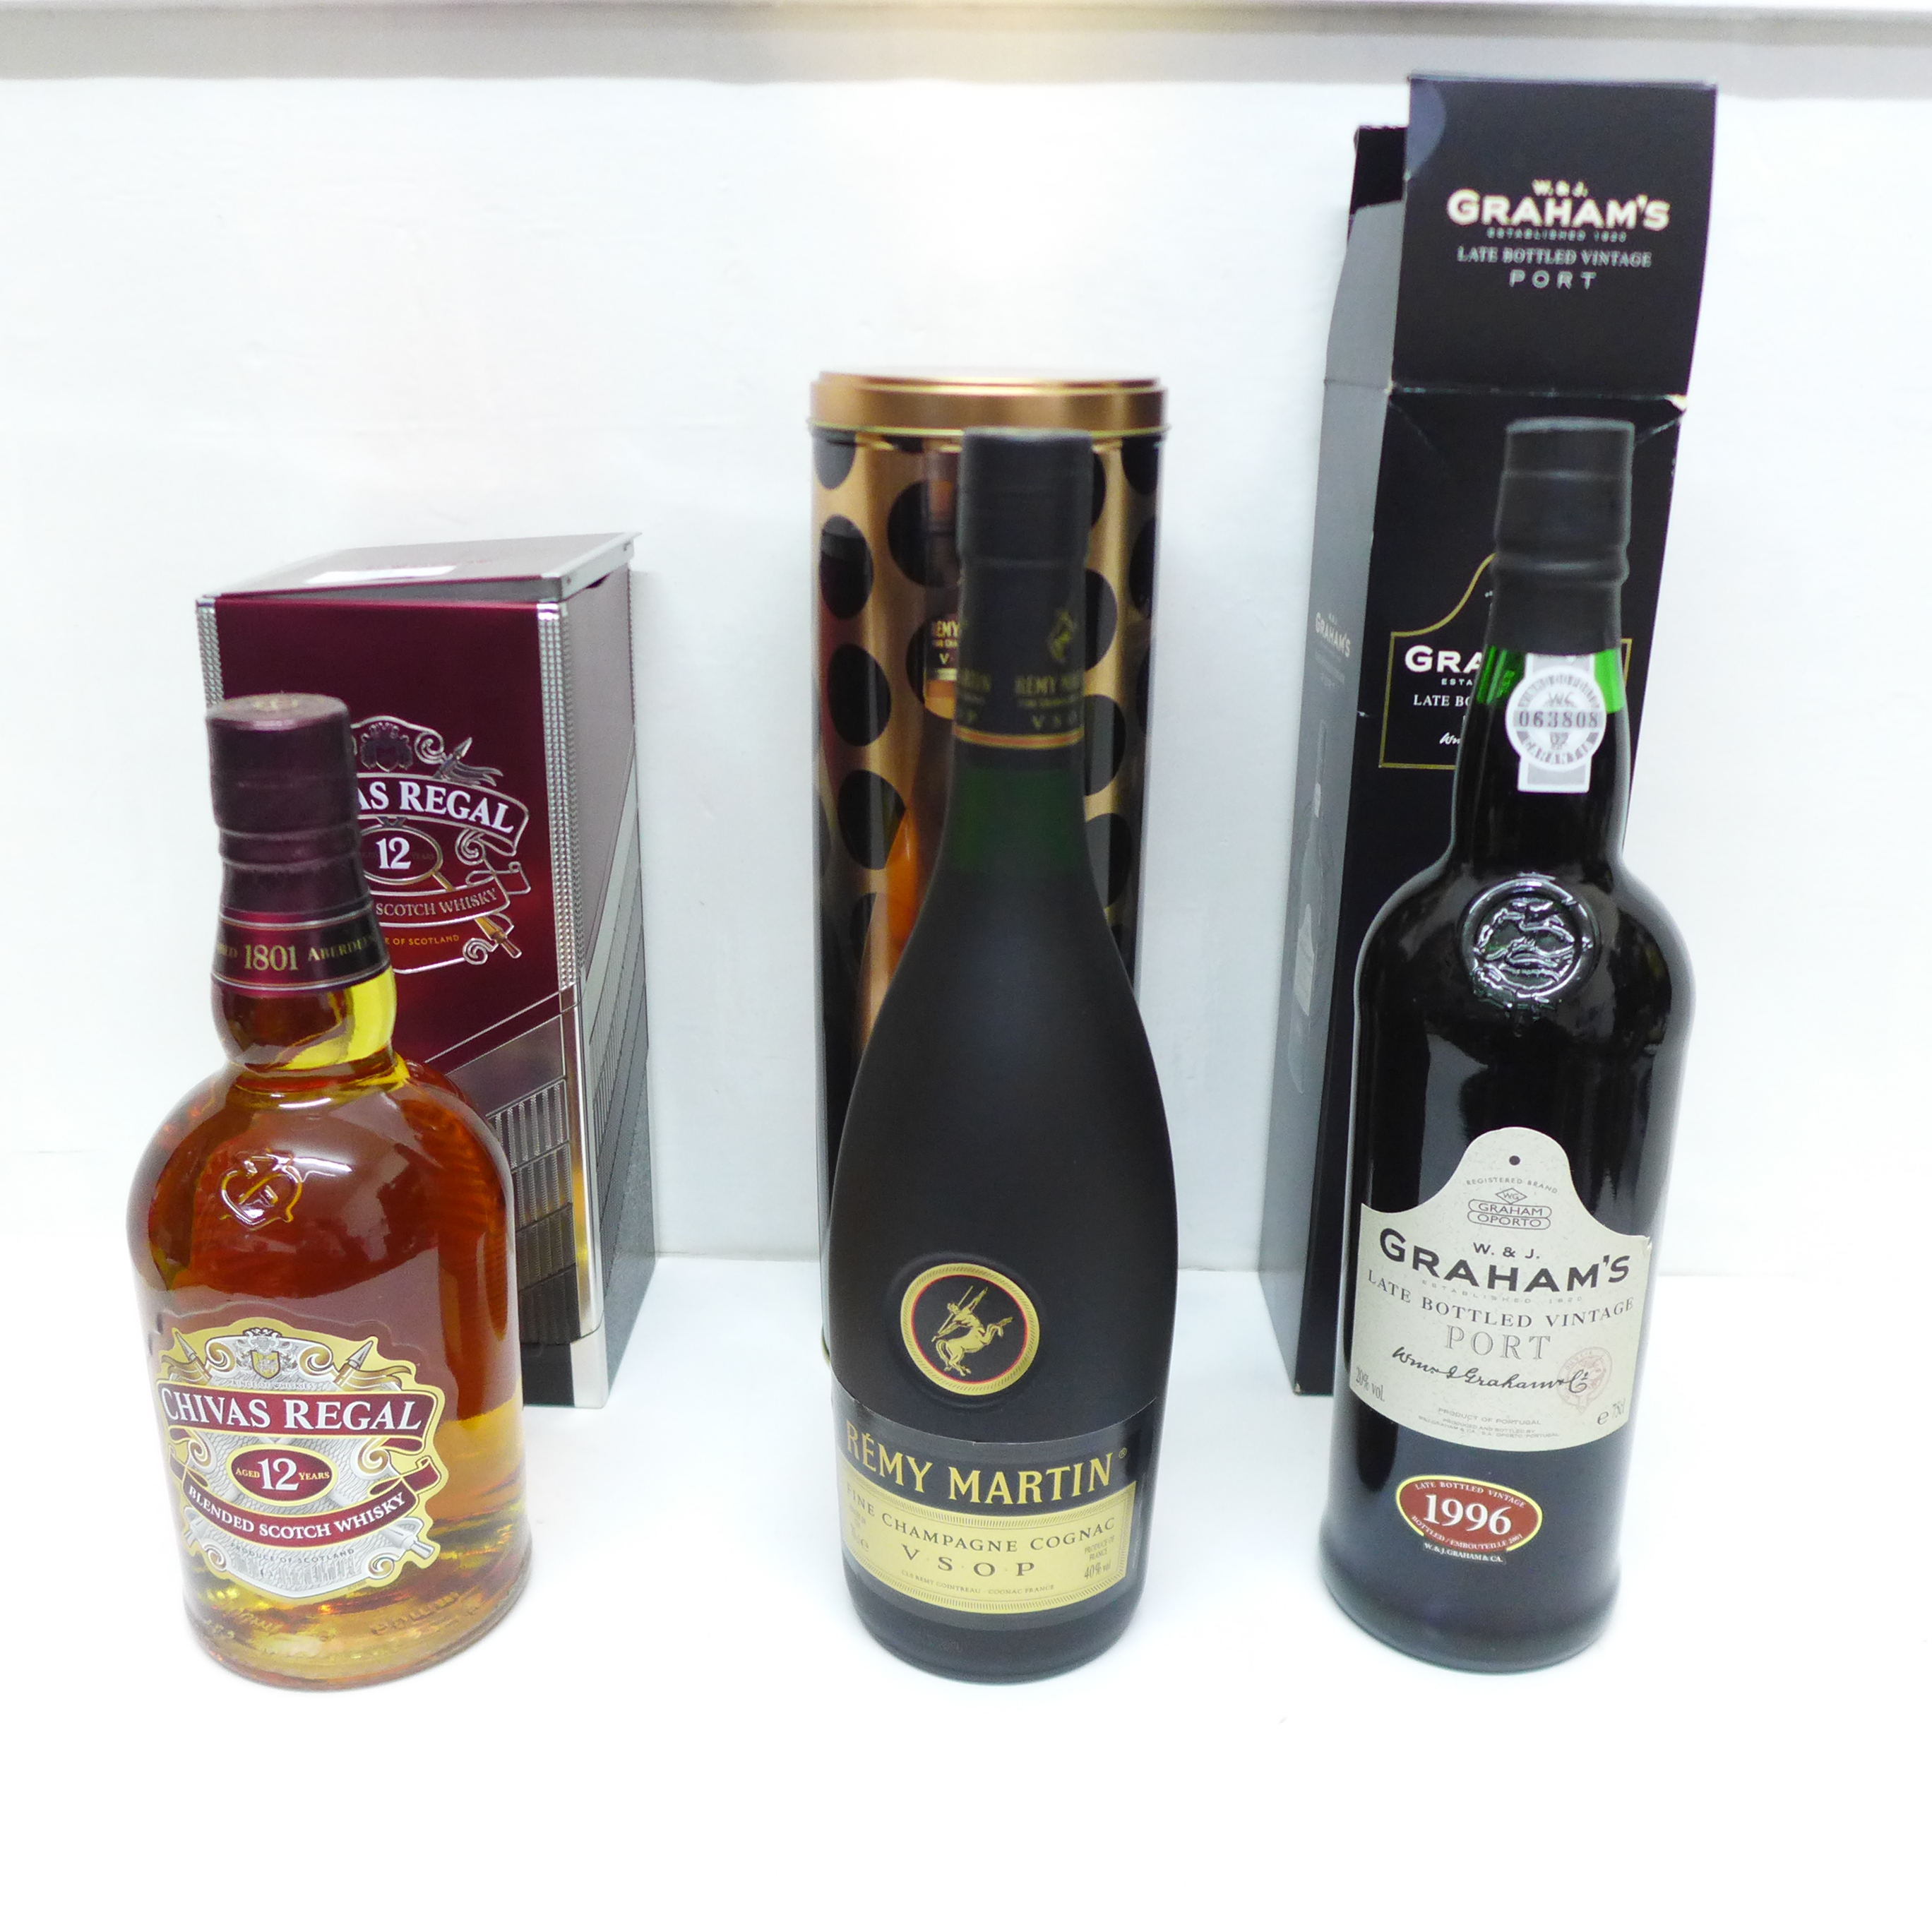 A bottle of Graham's vintage port, Chivas Scotch whisky and Remy Martin Champagne Cognac